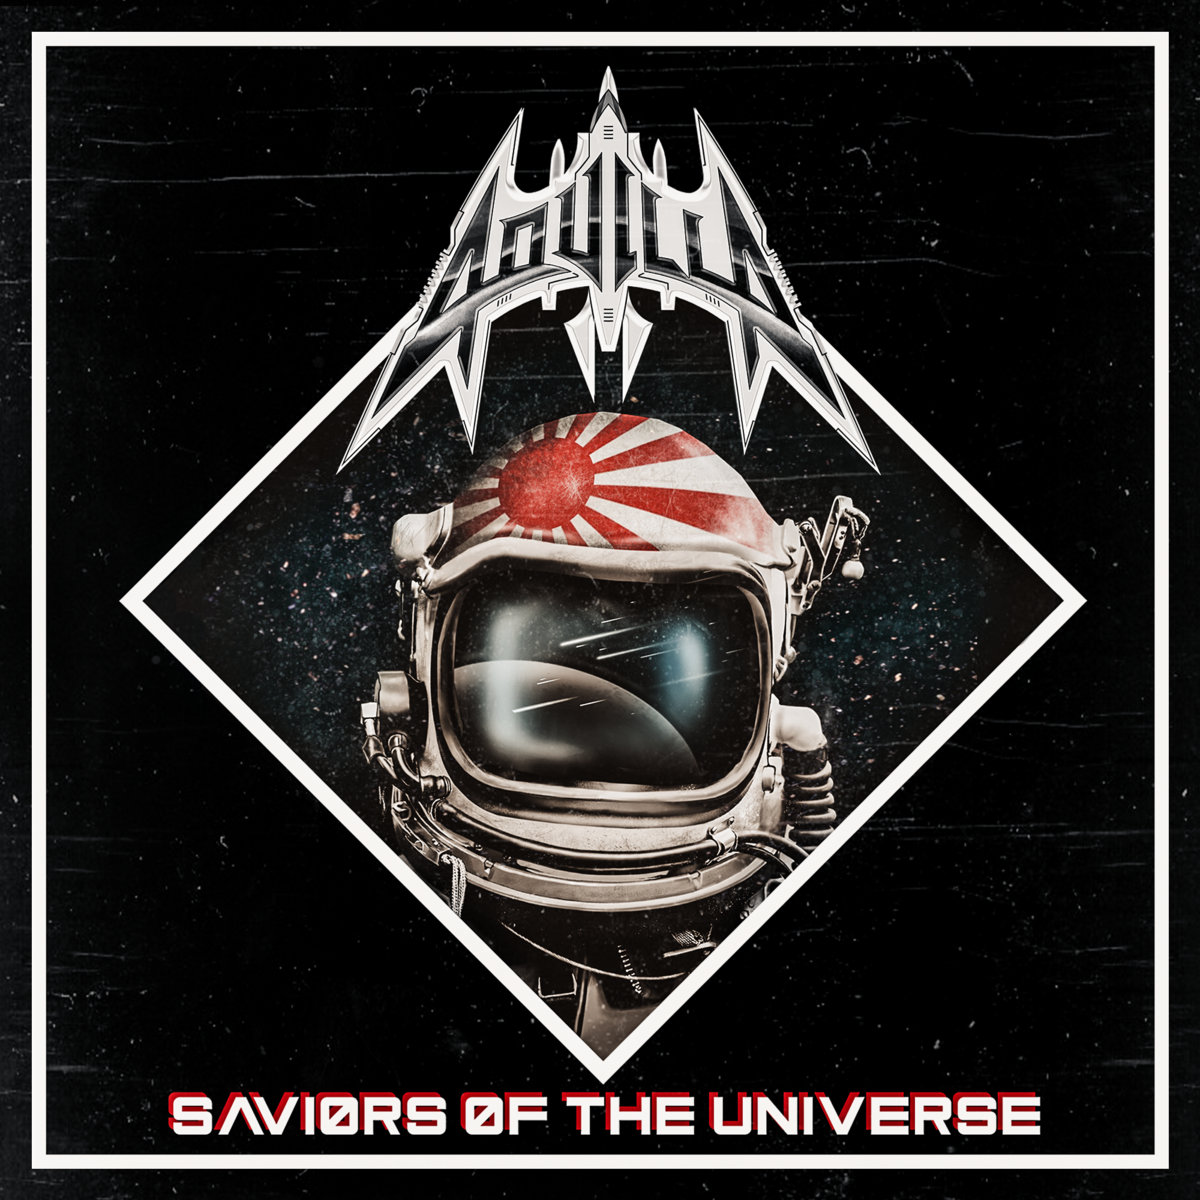  Aquilla 2019 - Saviors of the Universe